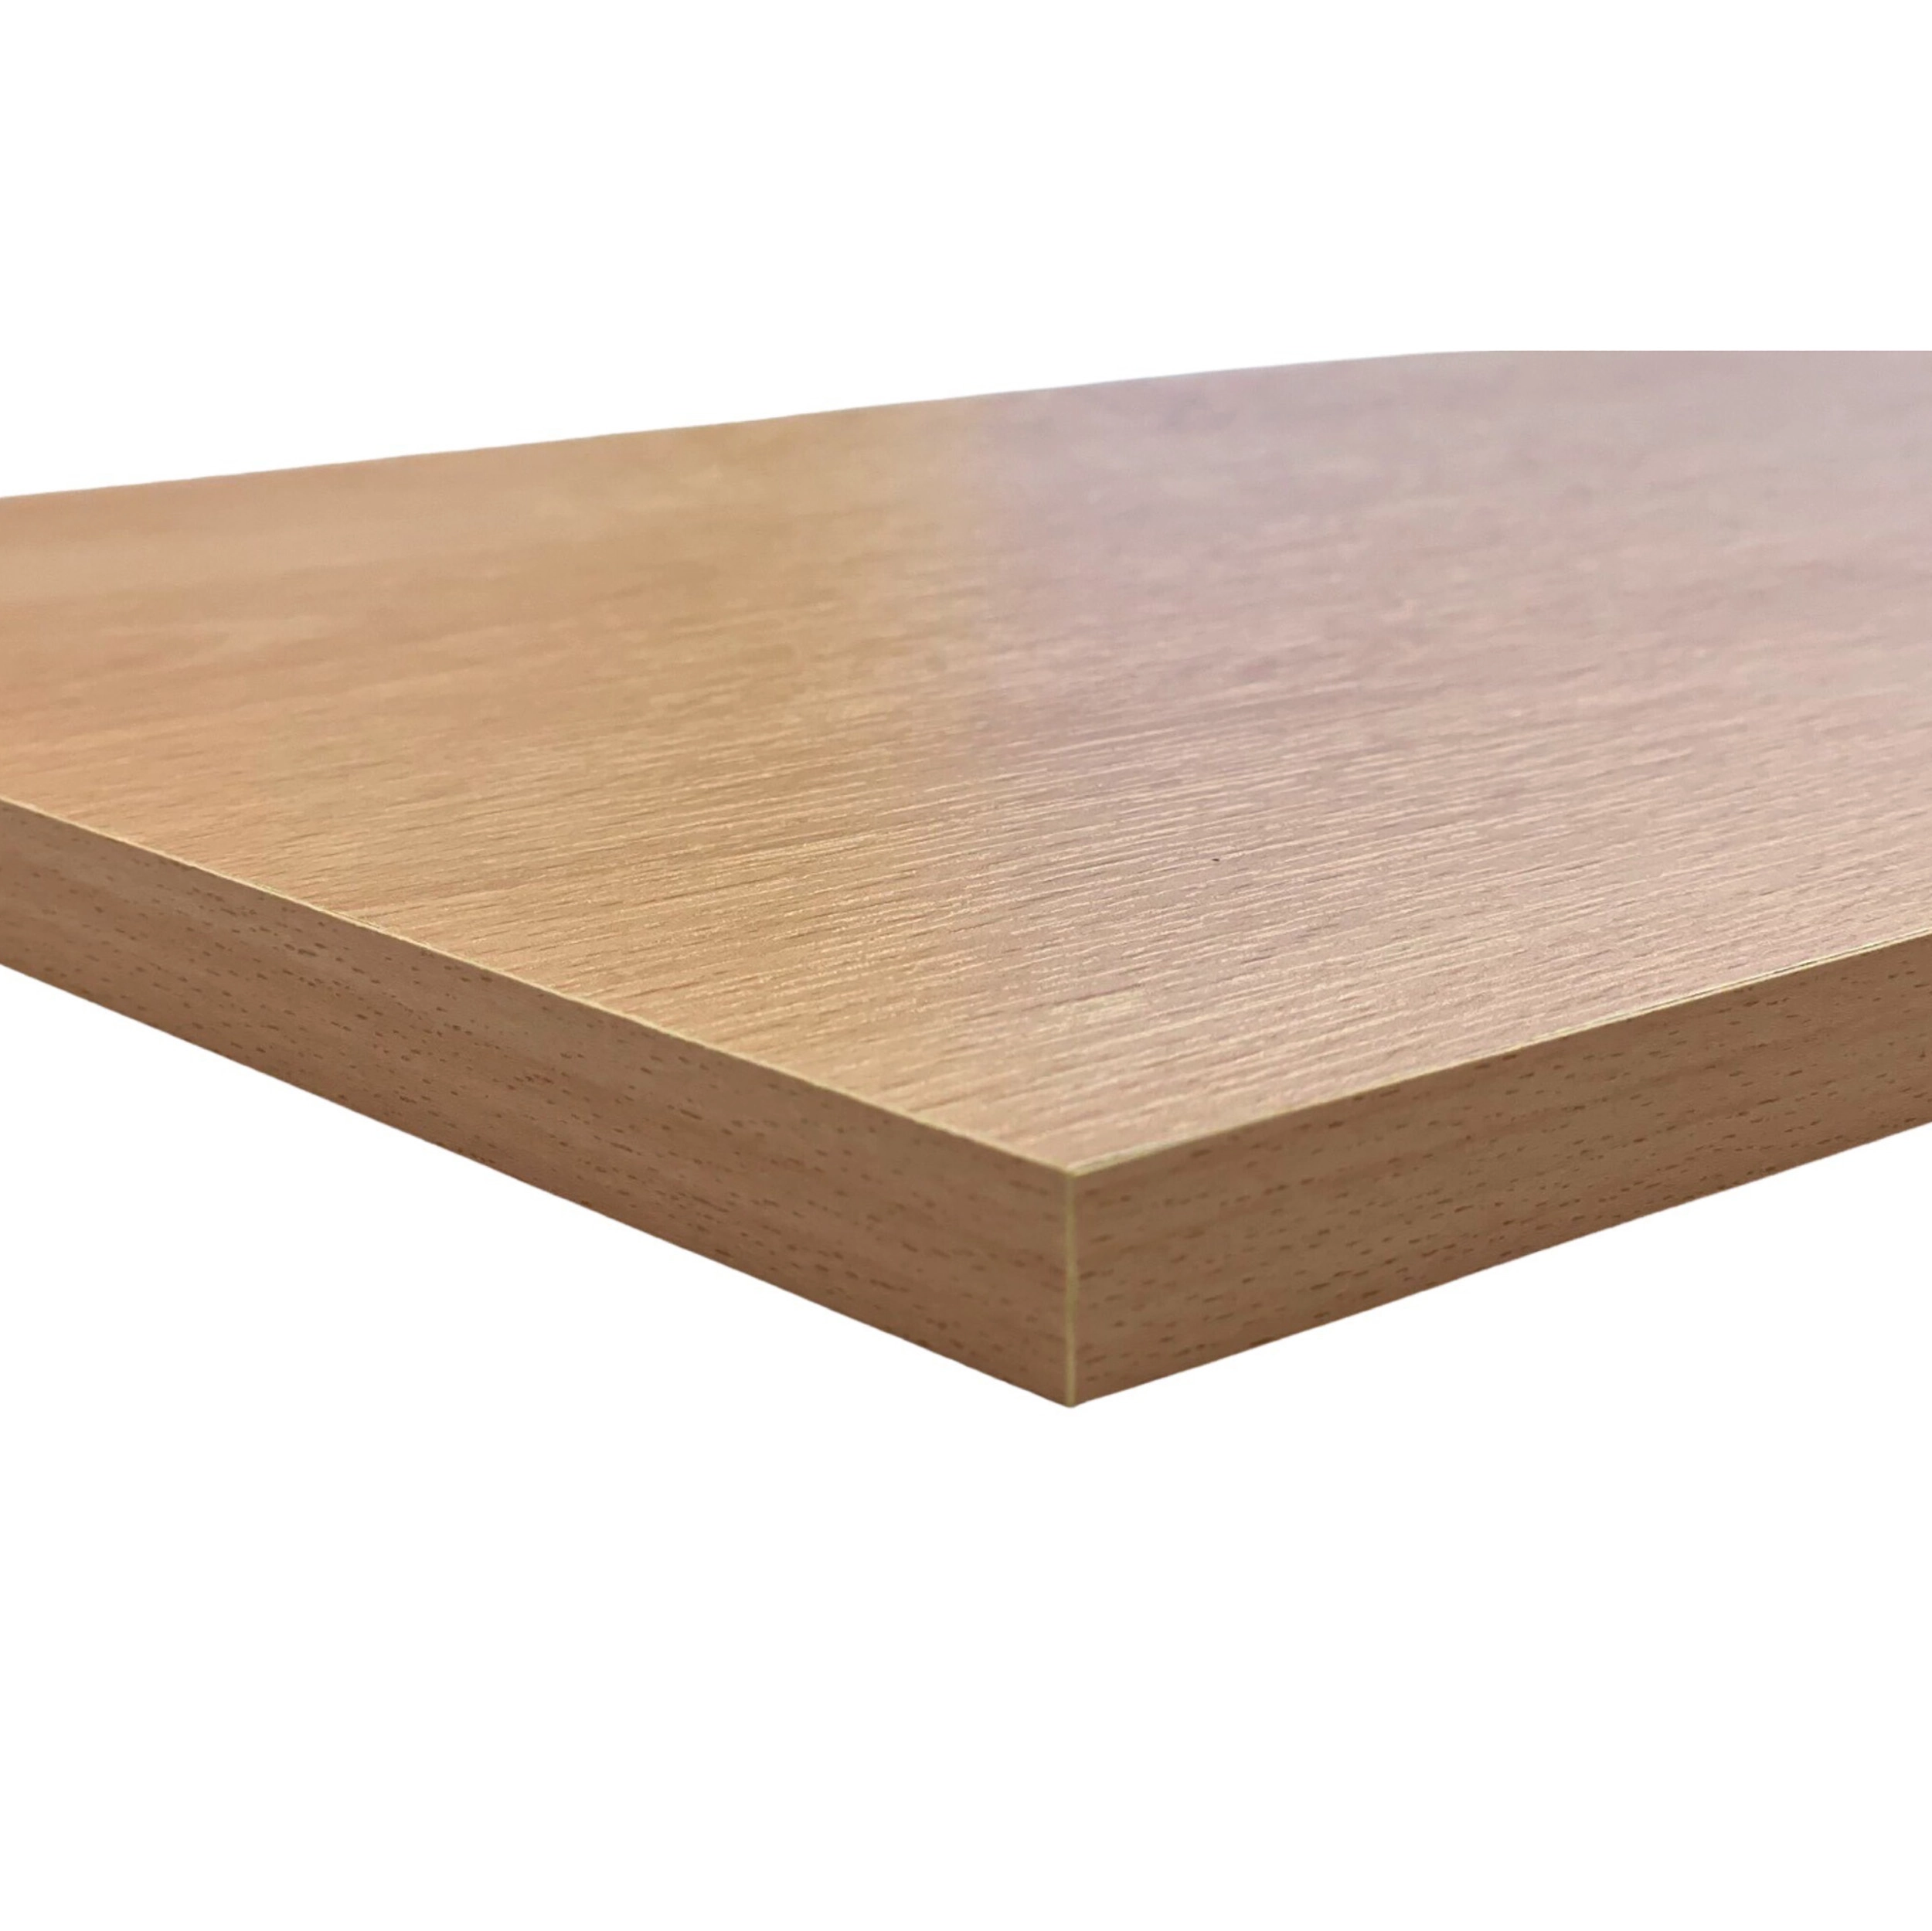 Möbelbauplatte Buche Holznachbildung 260 cm x 20 cm x 1,9 cm